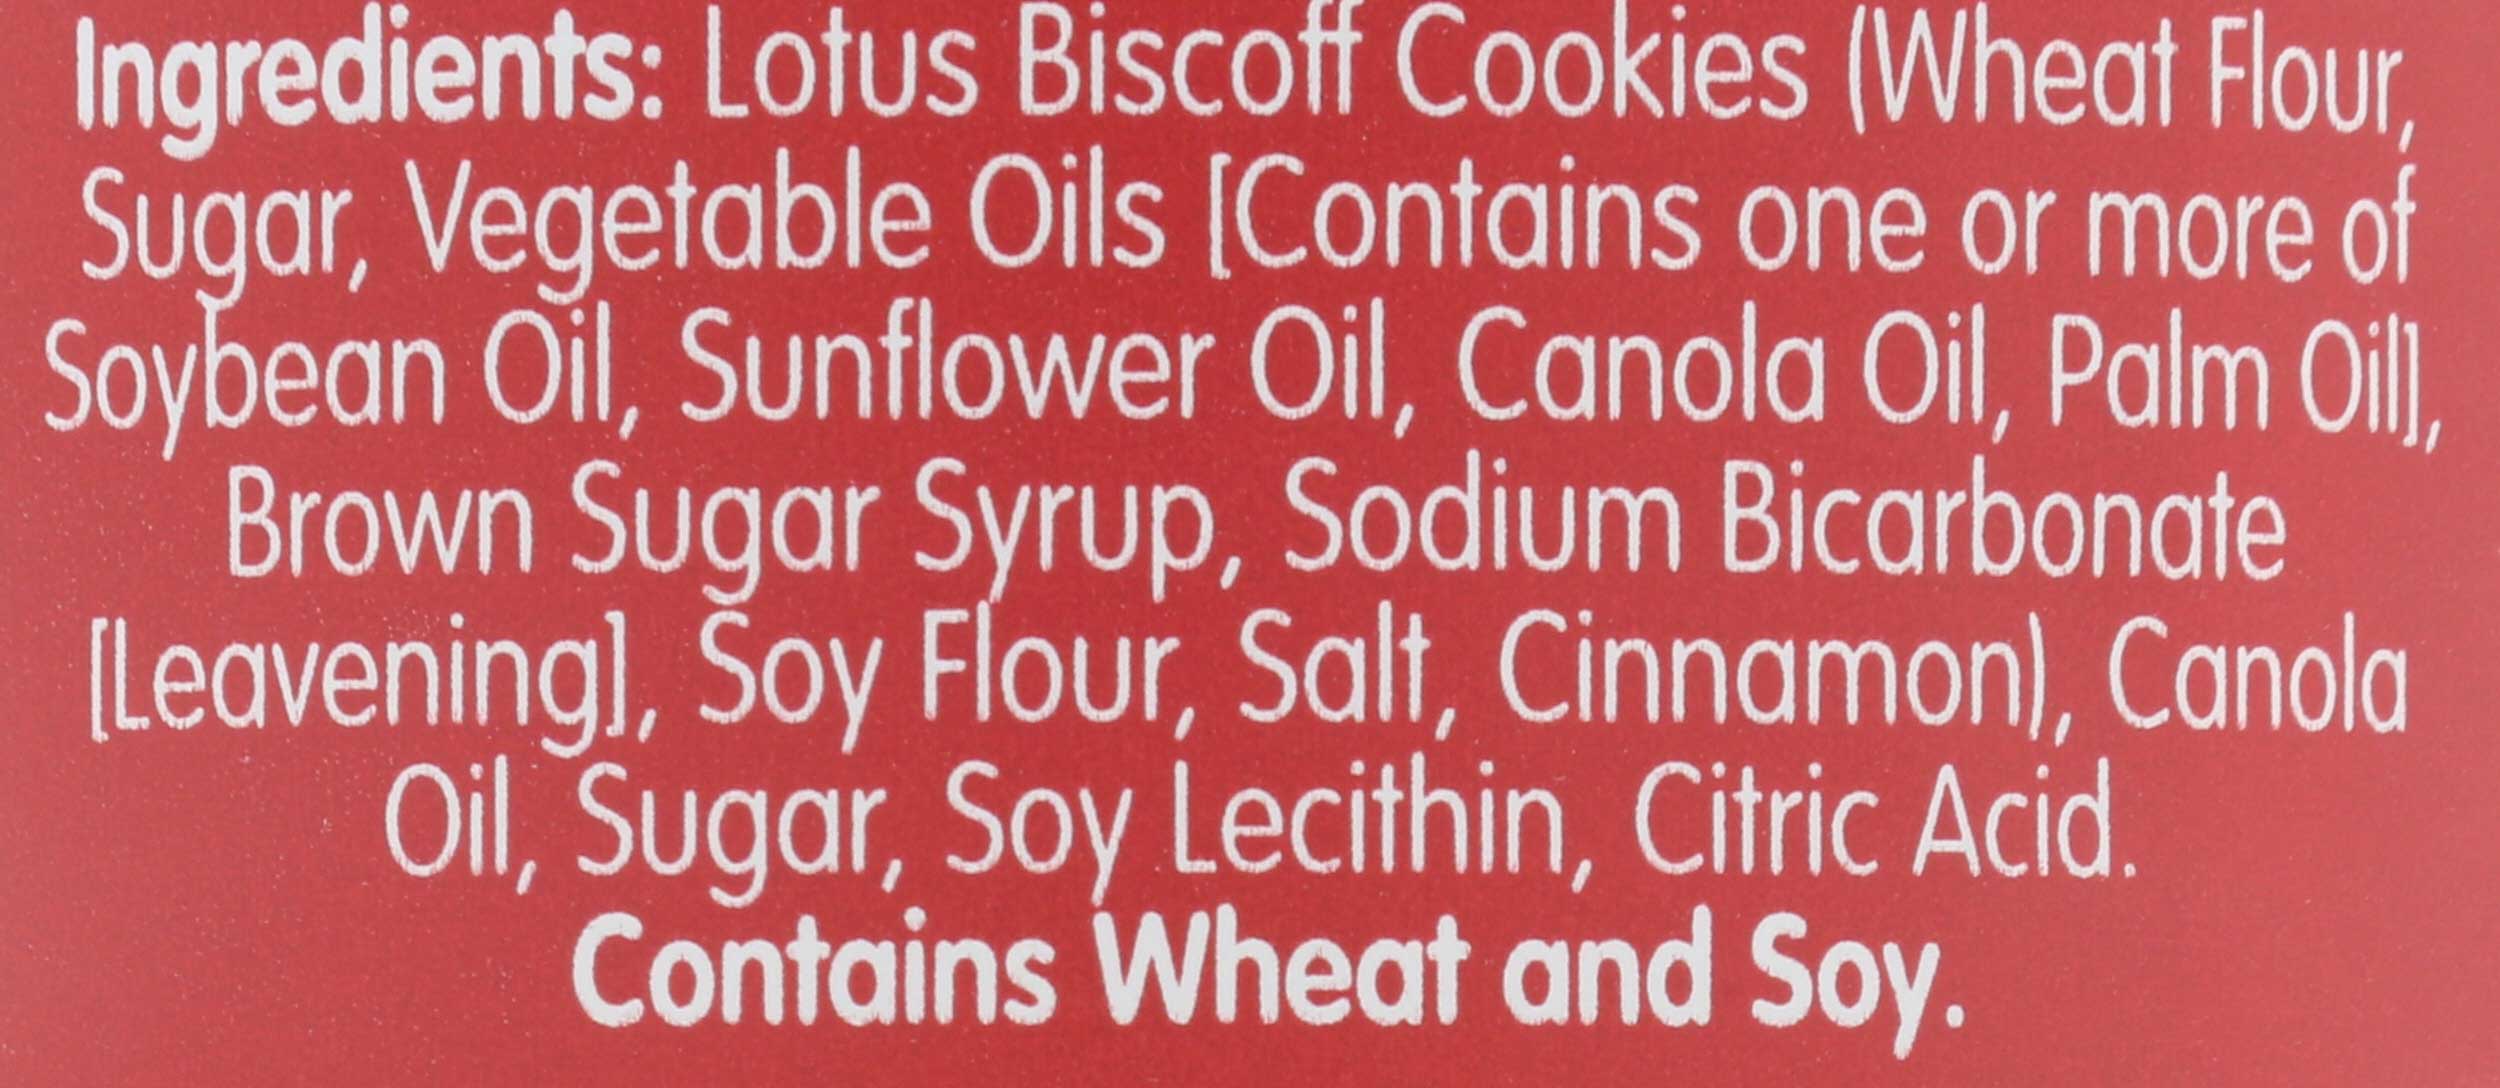 Lotus Biscoff, Cookie Butter Spread, Creamy, non GMO + Vegan, 14.1 oz, Pack  of 8